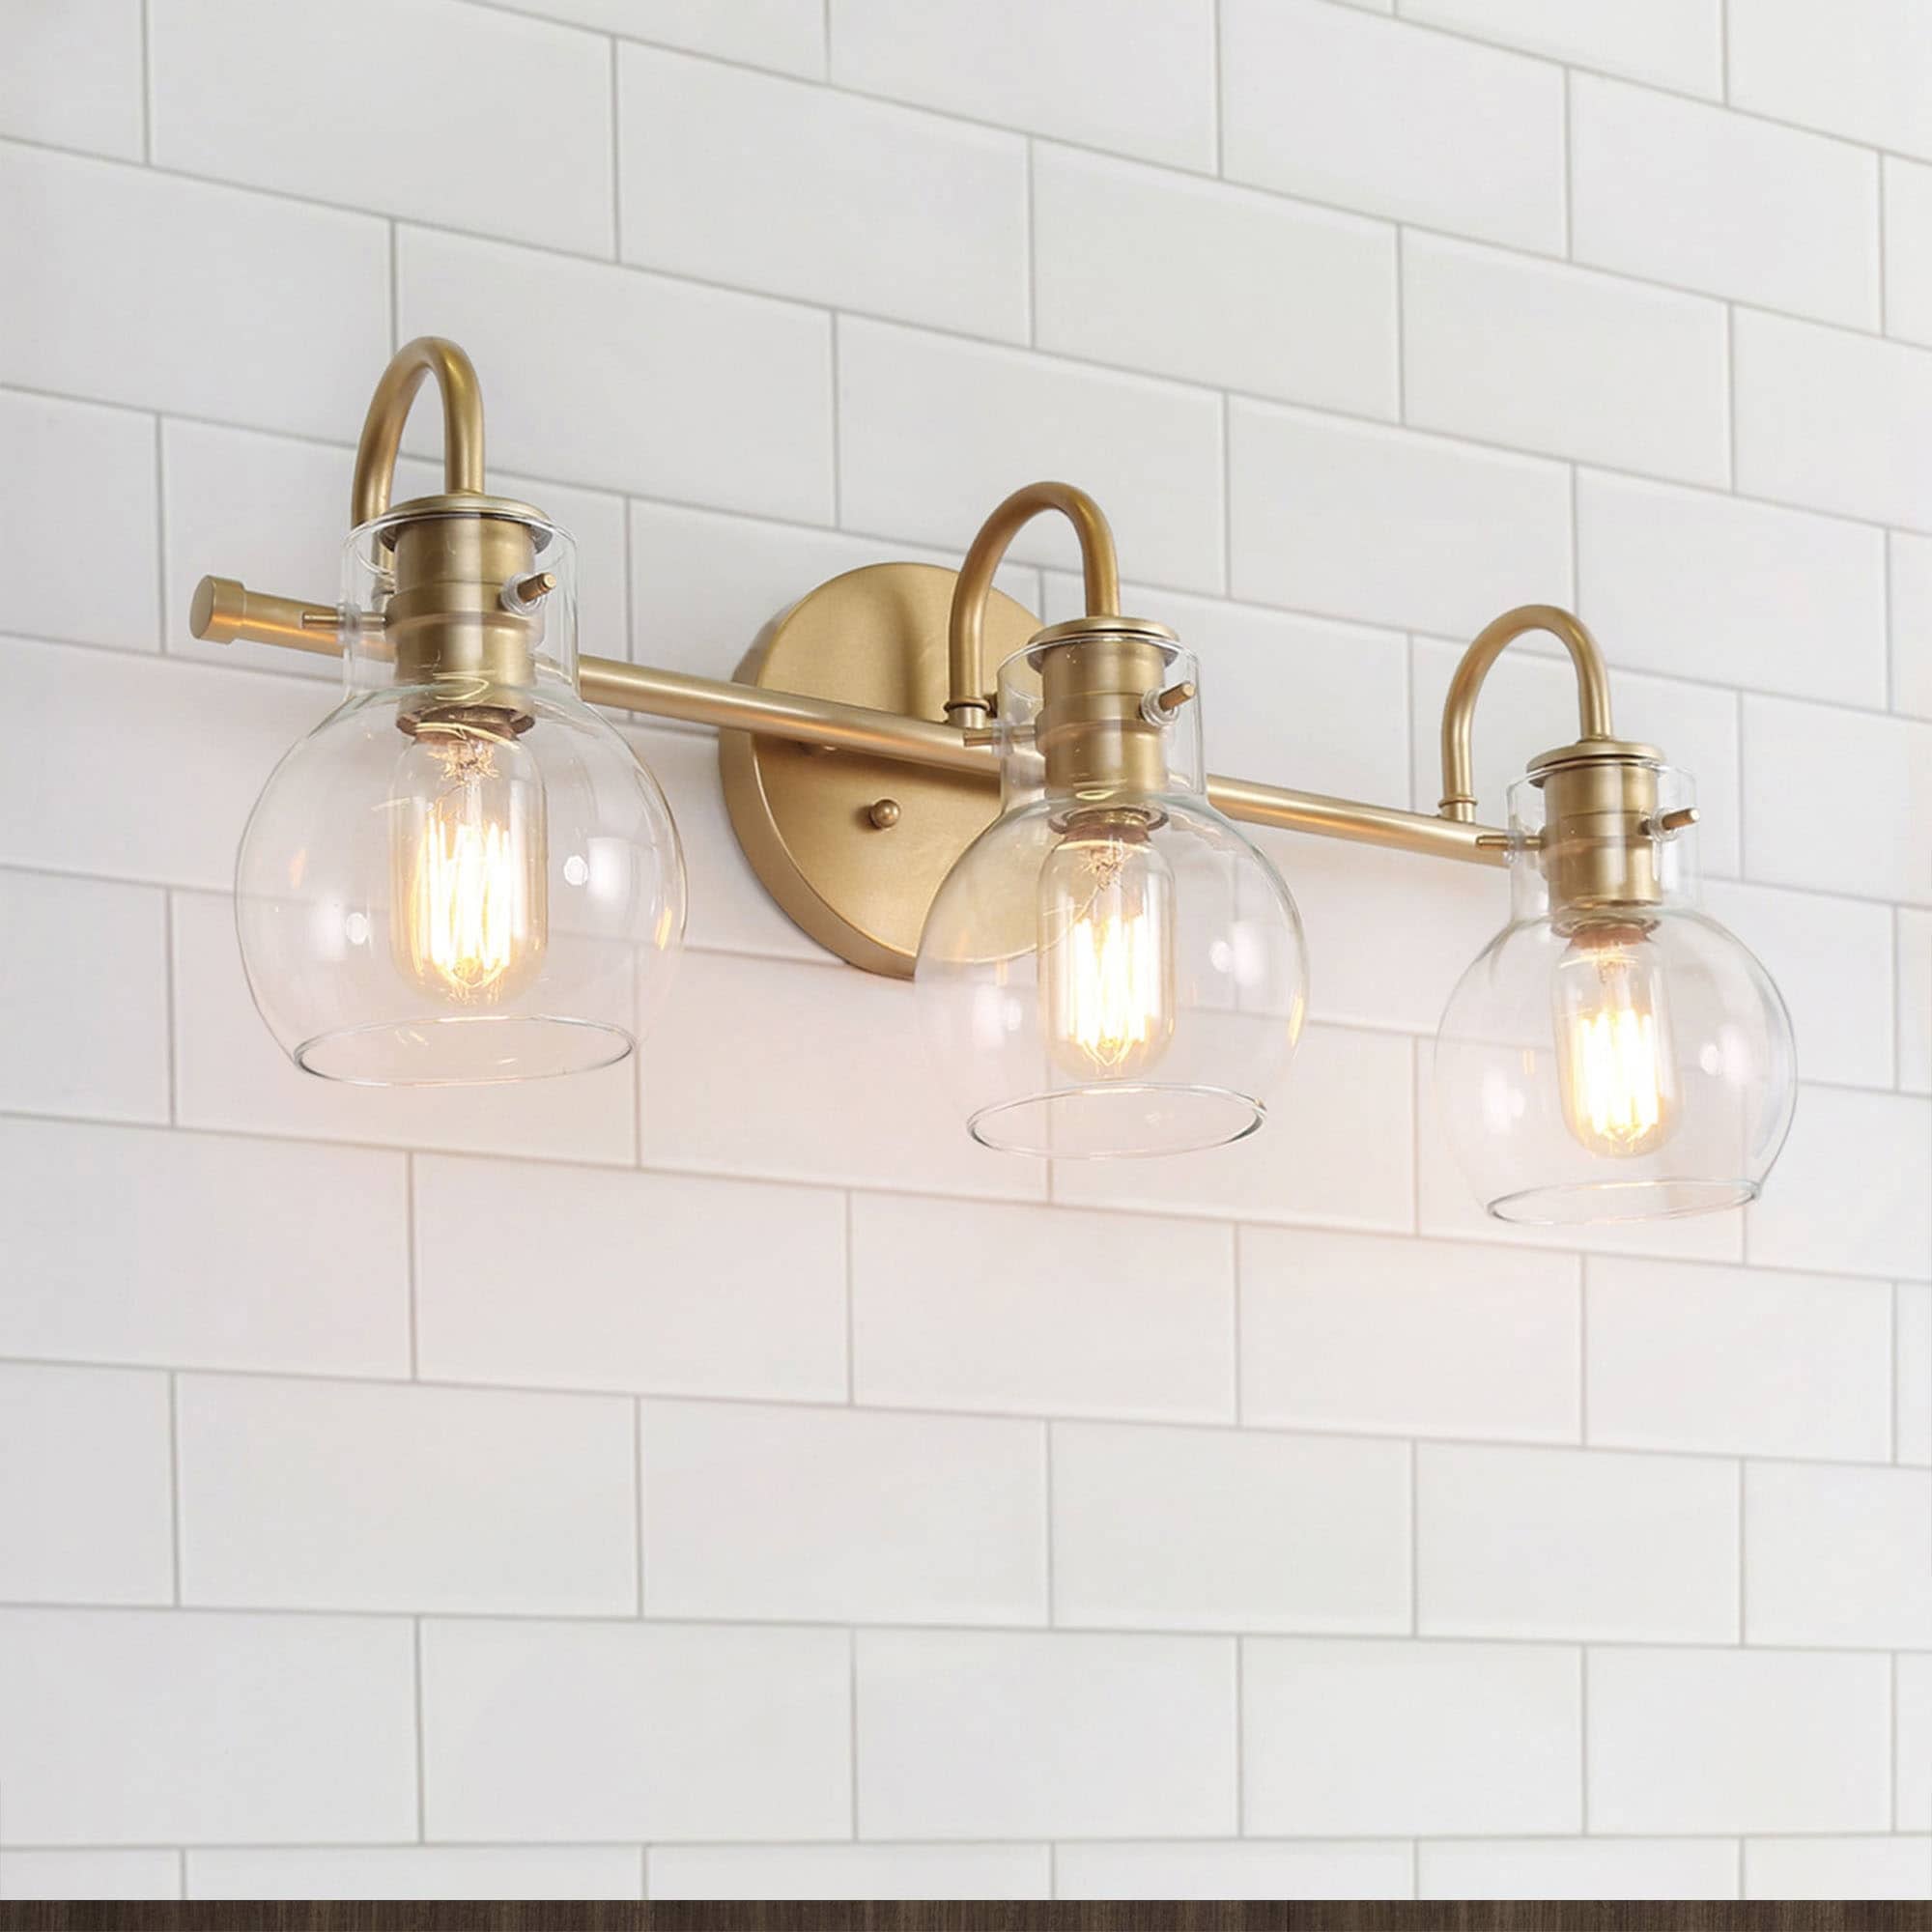 Shop Modern Bathroom Wall Sconces Gold Vanity Lighting For Powder